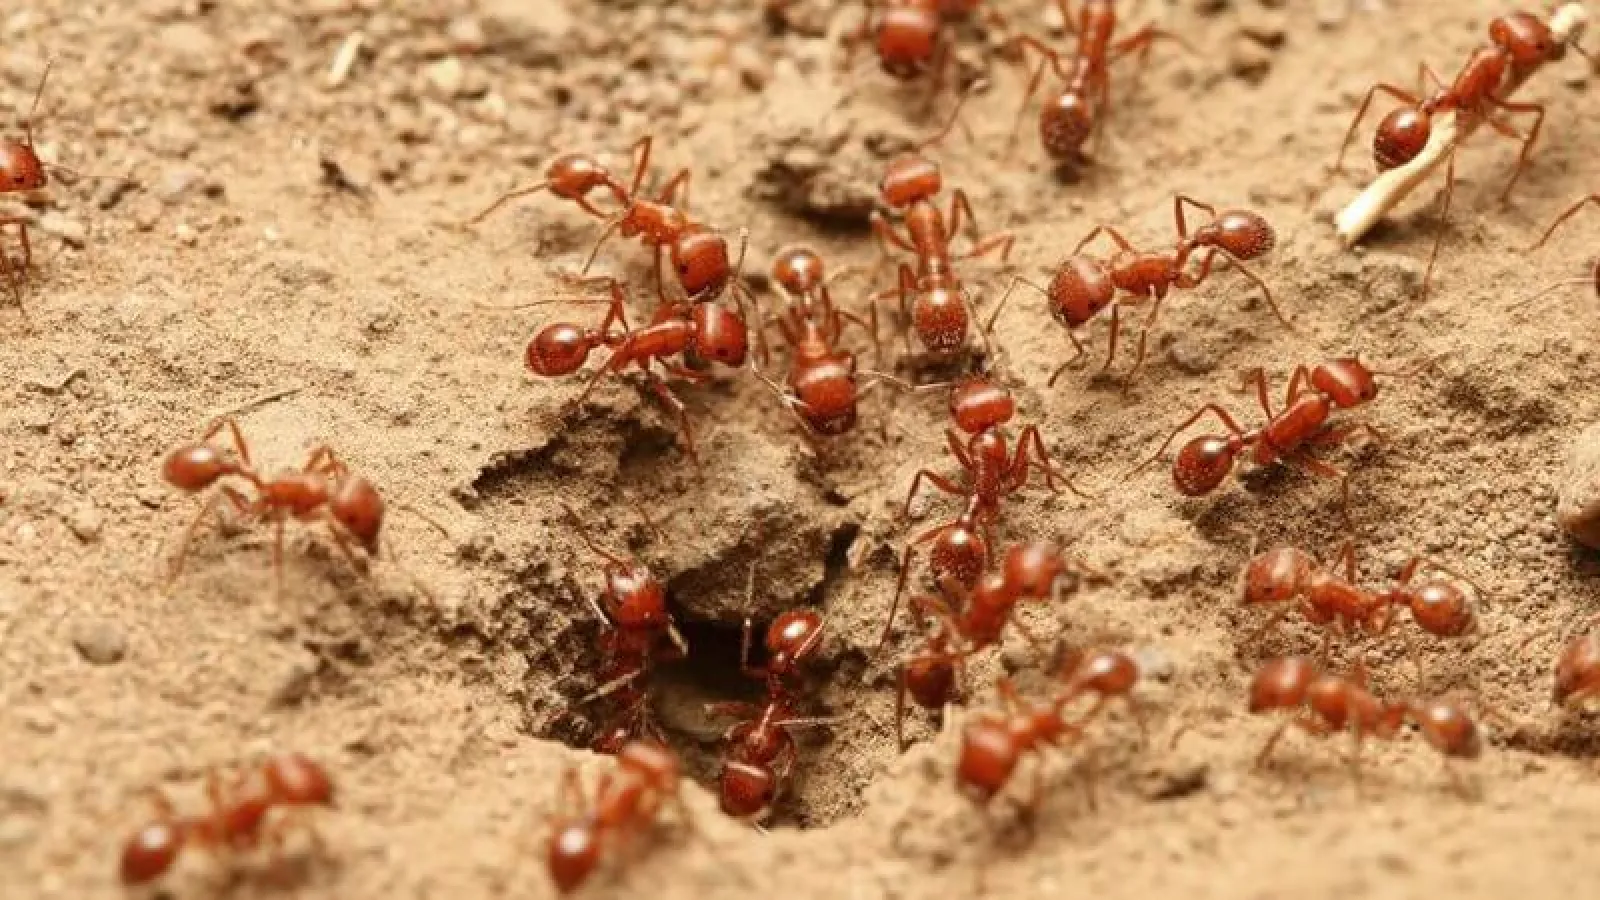 Do Fire Ants Really Bite?